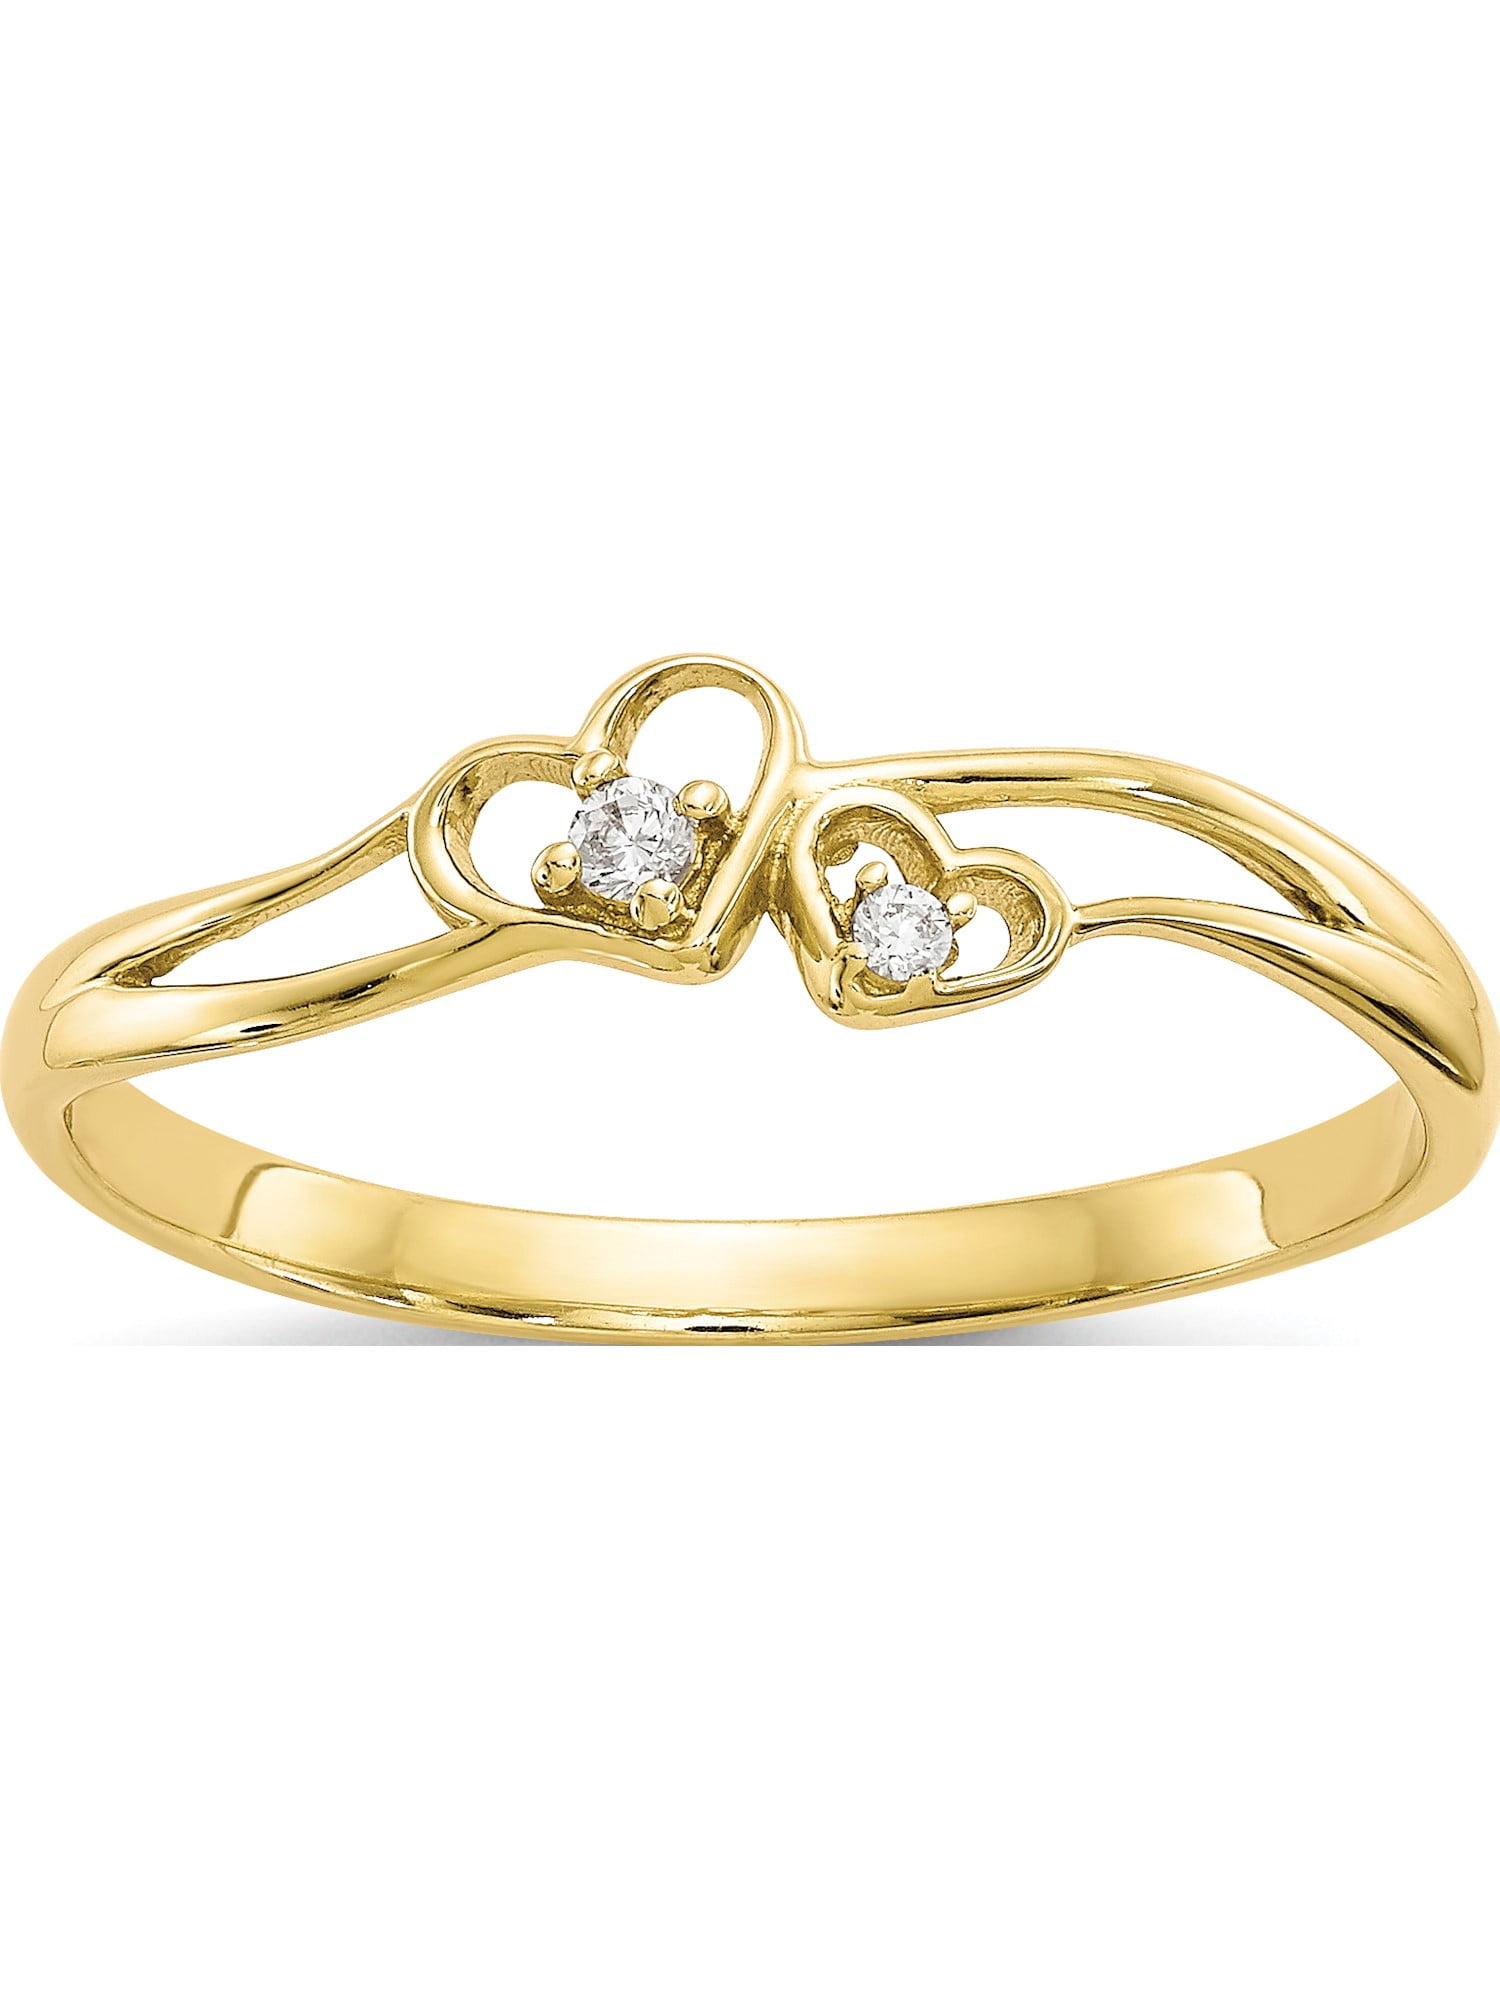 10k Yellow Gold CZ Double Heart Ring | Walmart Canada